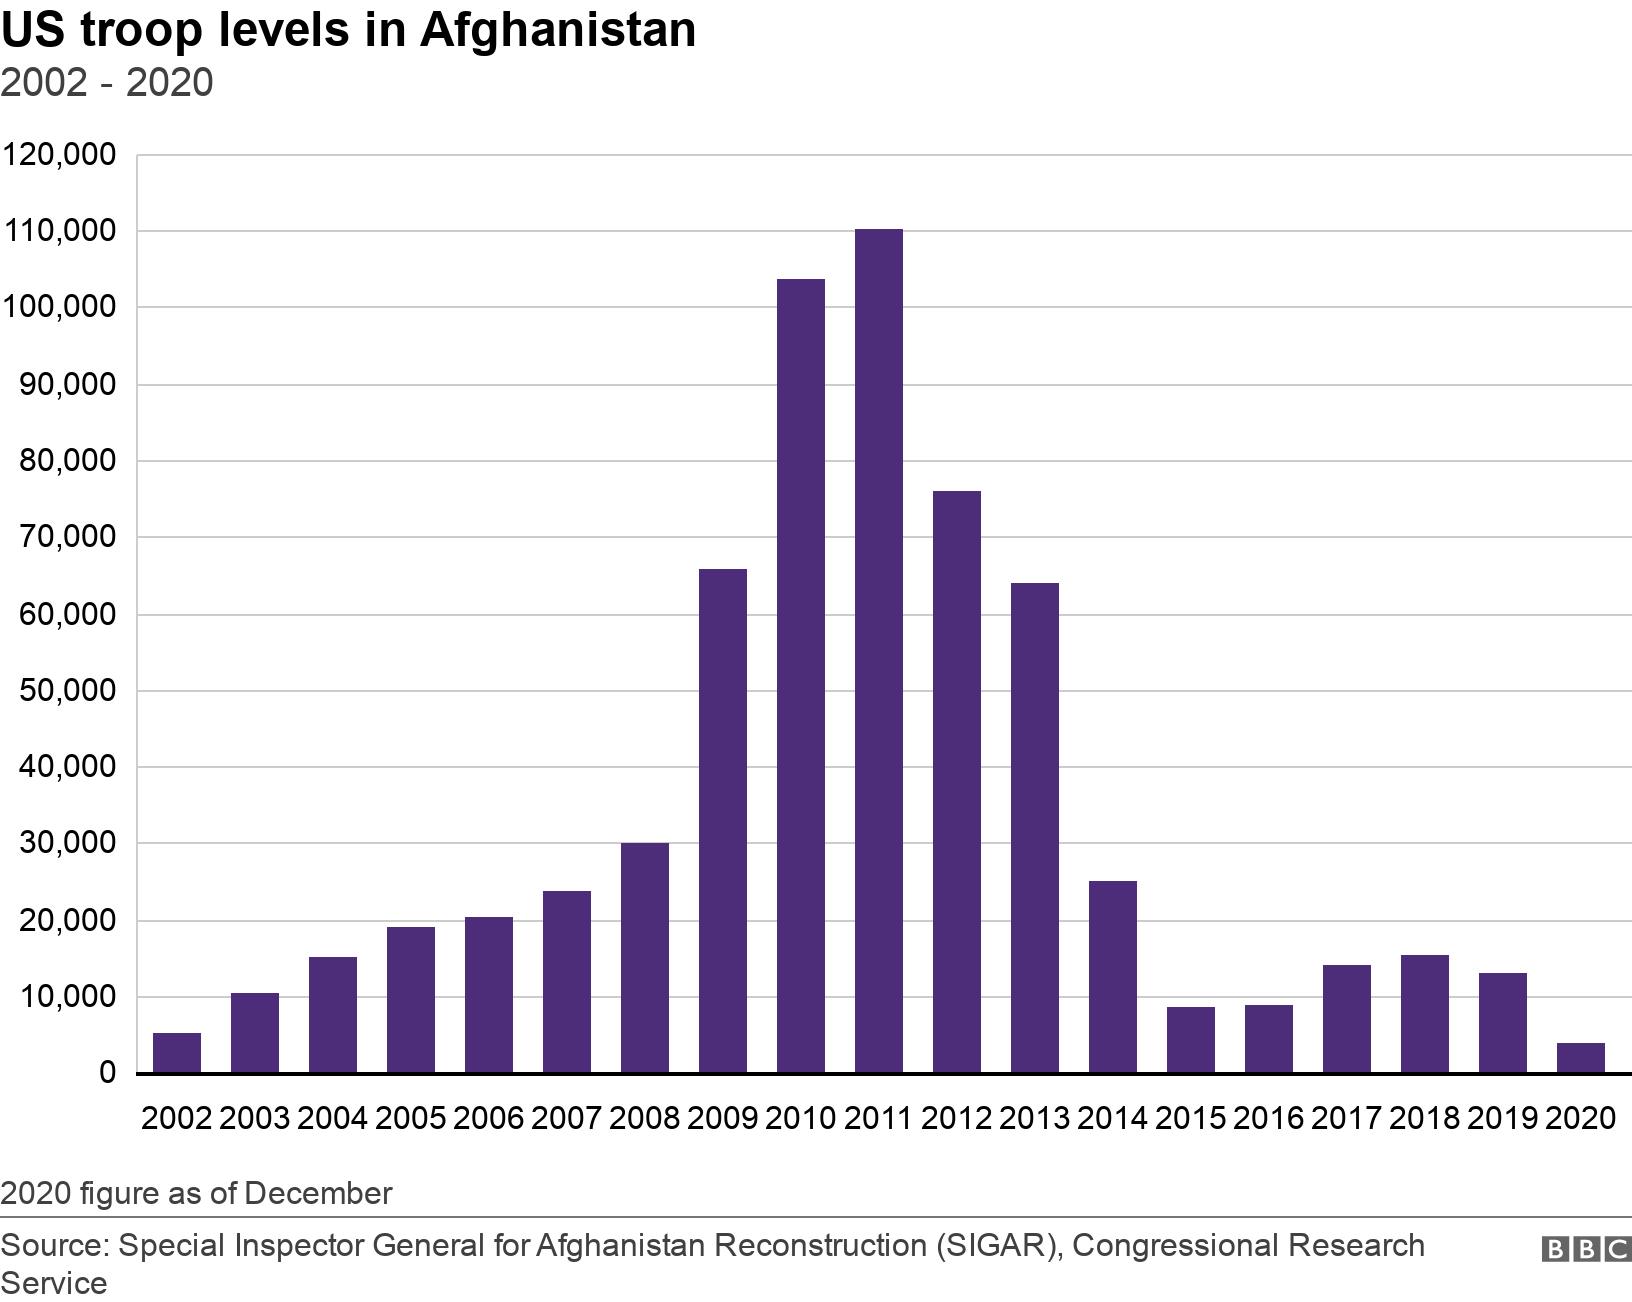 US troop levels in Afghanistan. 2002 - 2020. Chart showing US troop levels in Afghanistan from 2002 to 2019 2020 figure as of December.